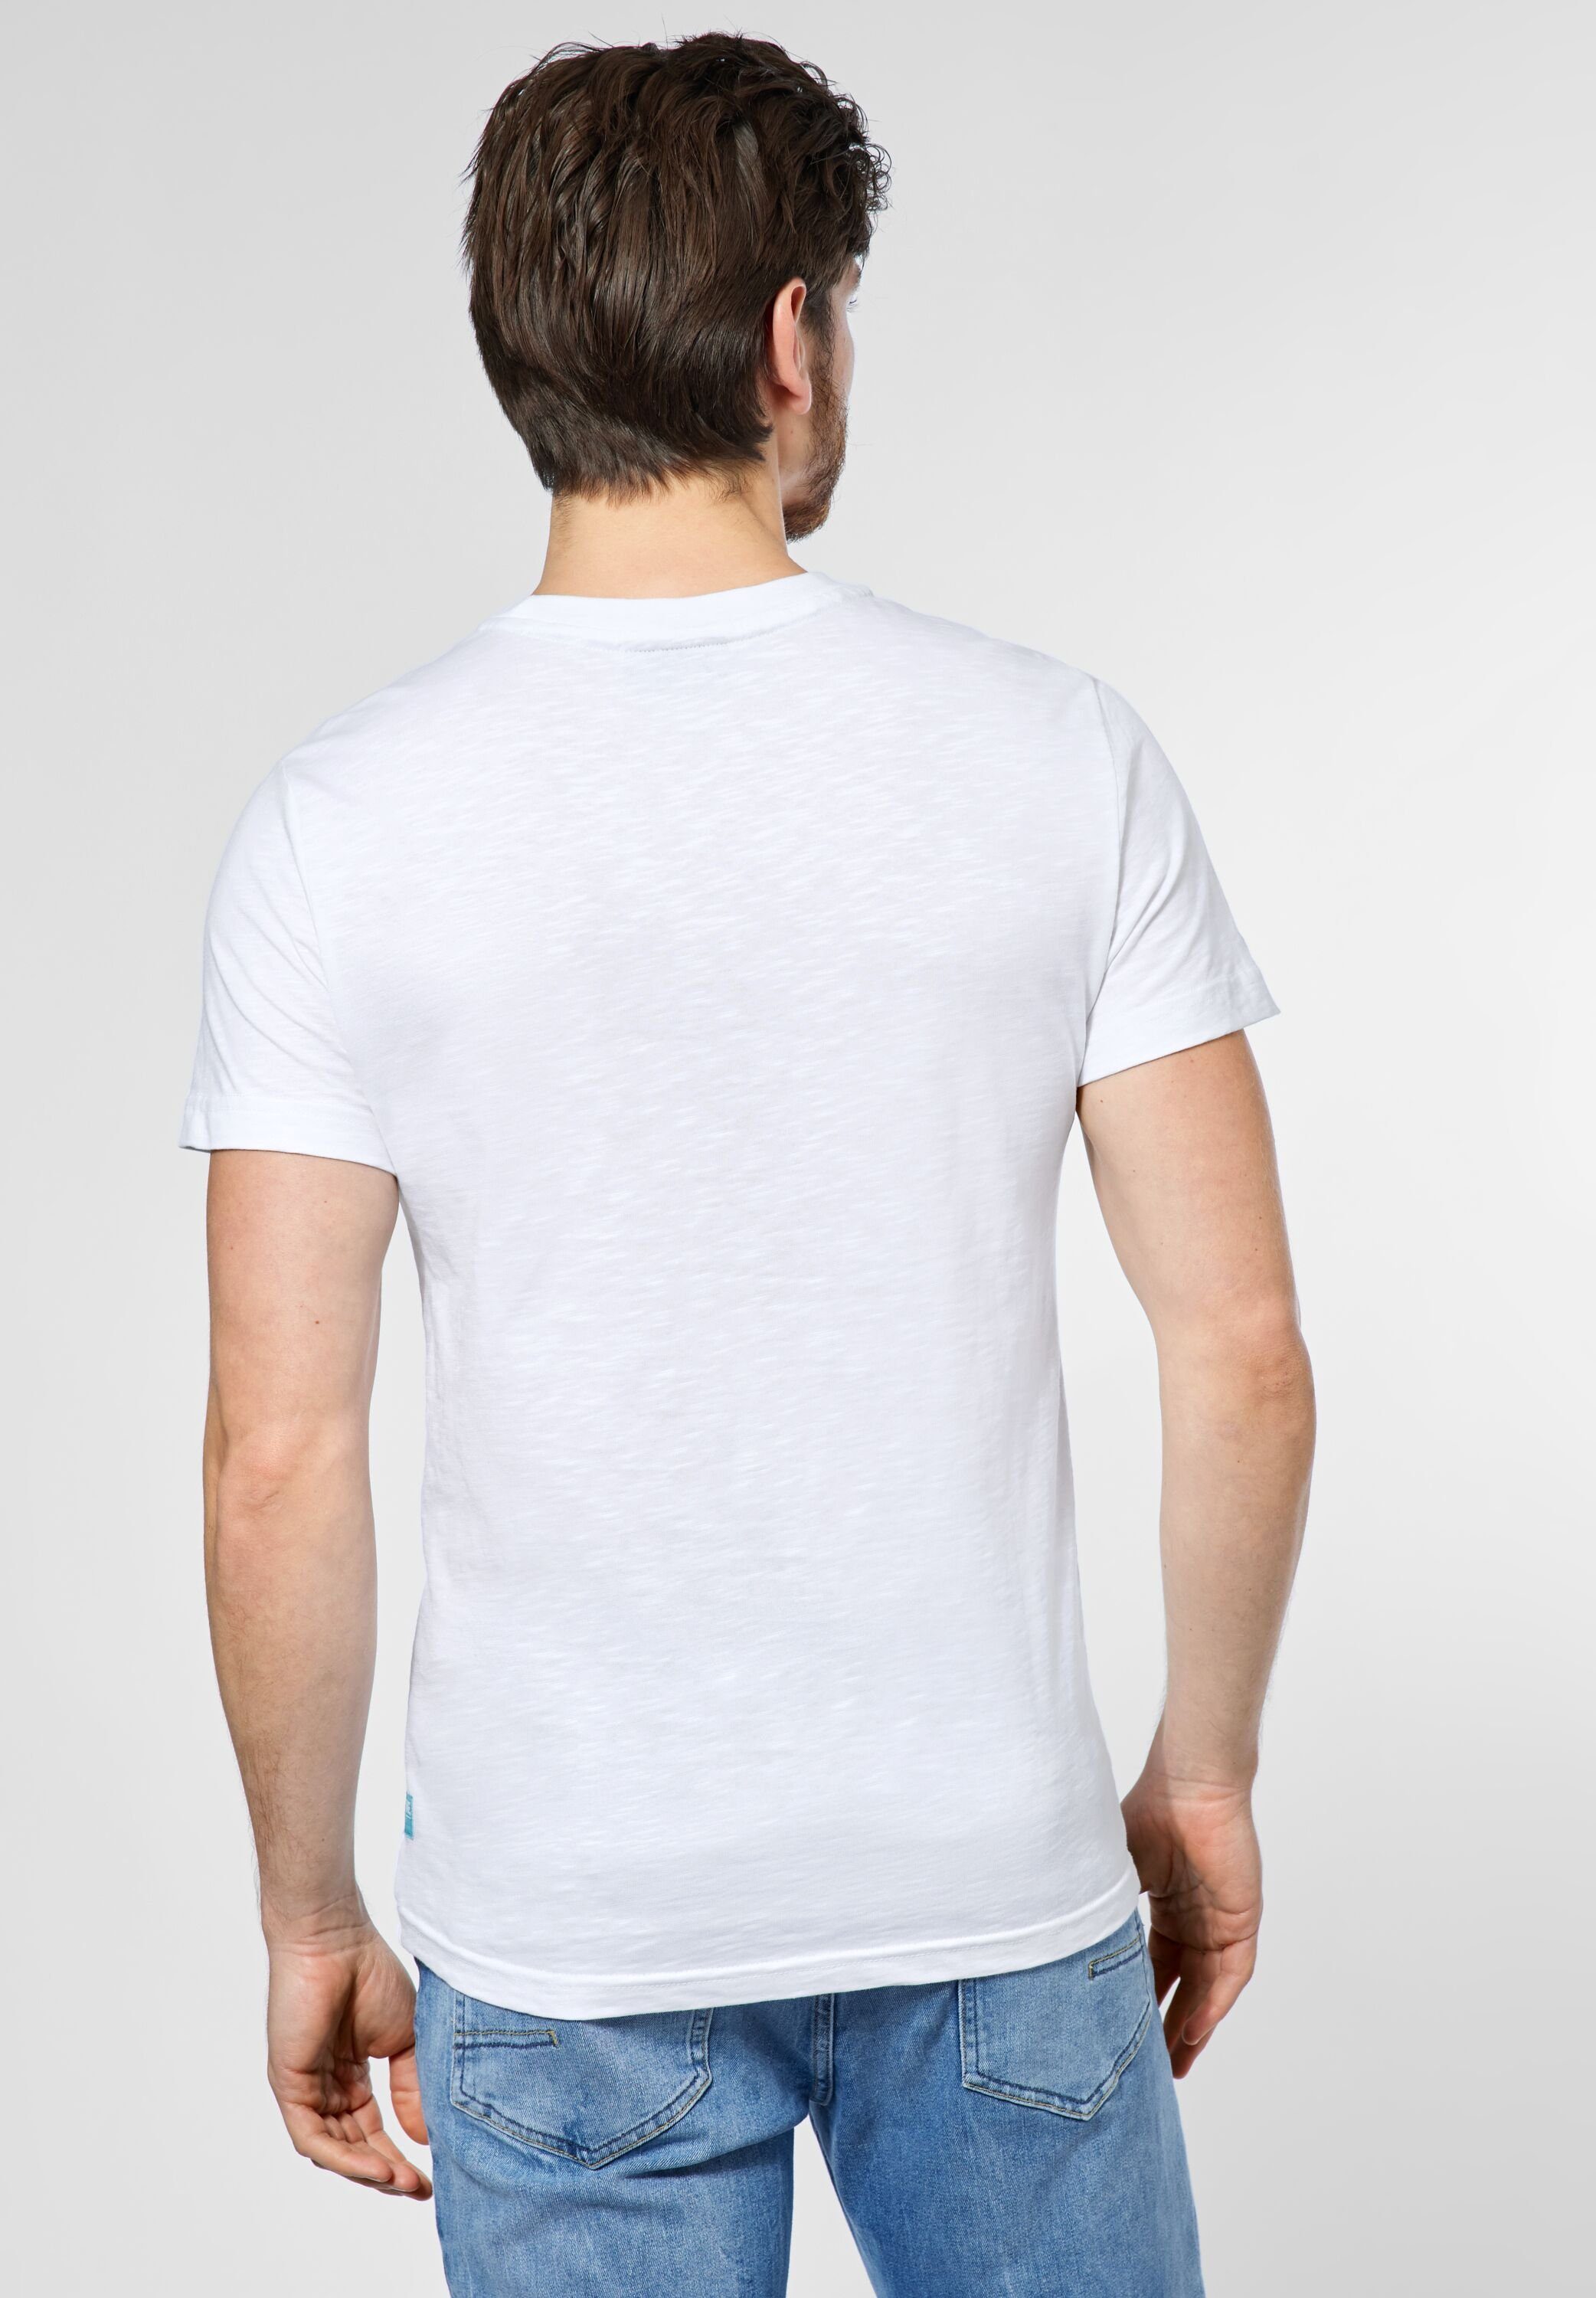 ONE White Wording-Print T-Shirt mit STREET MEN